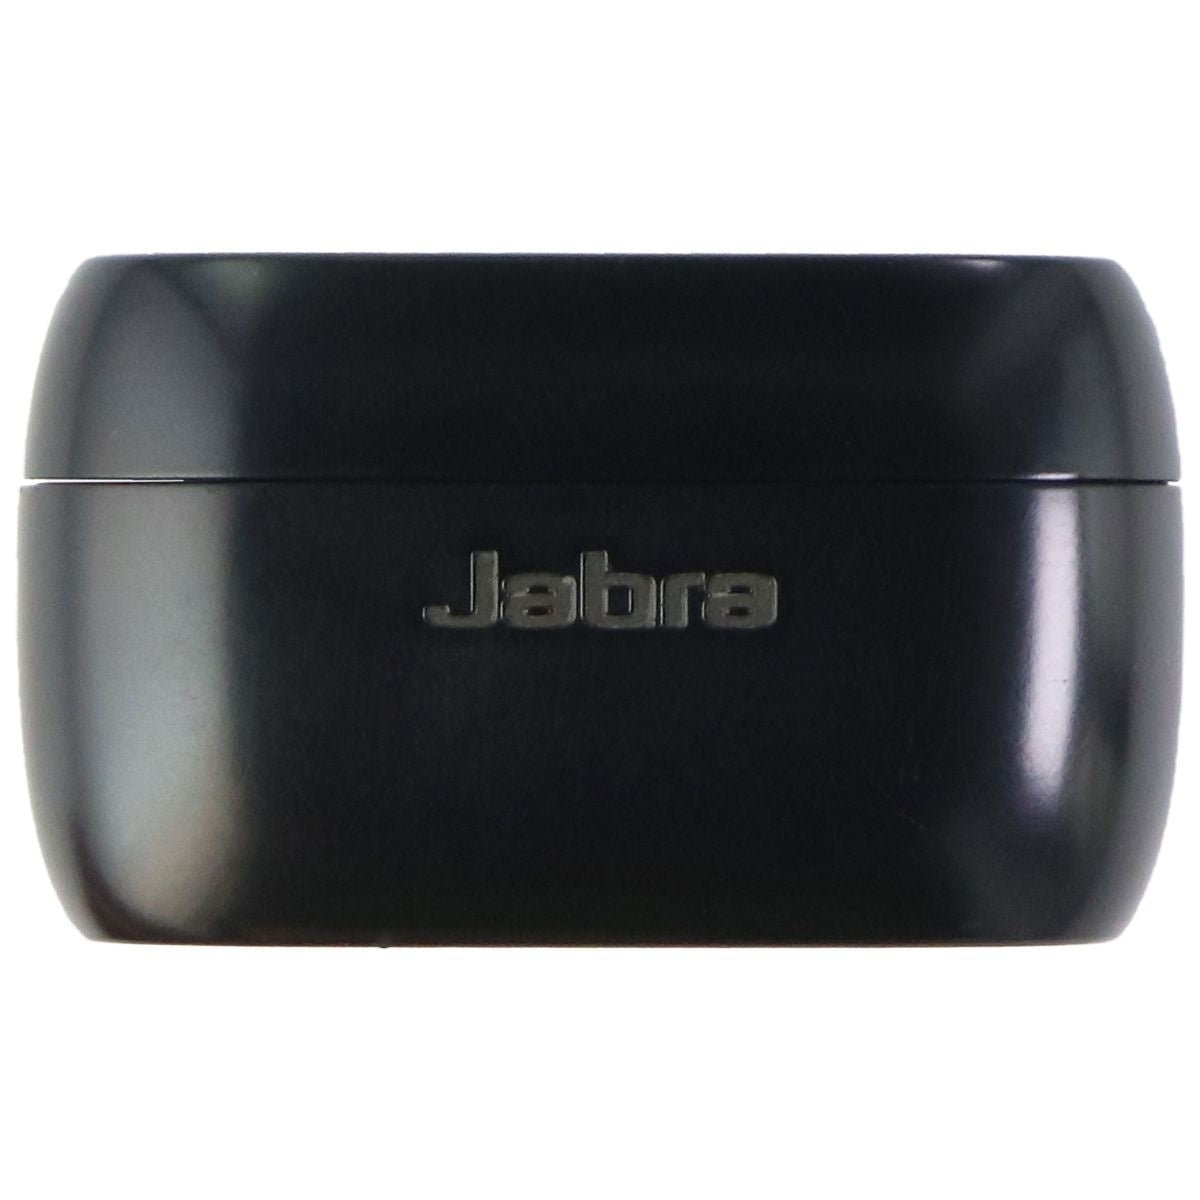 Jabra Elite 75t Wireless Earbuds with Charging Case - Black Portable Audio - Headphones Jabra    - Simple Cell Bulk Wholesale Pricing - USA Seller